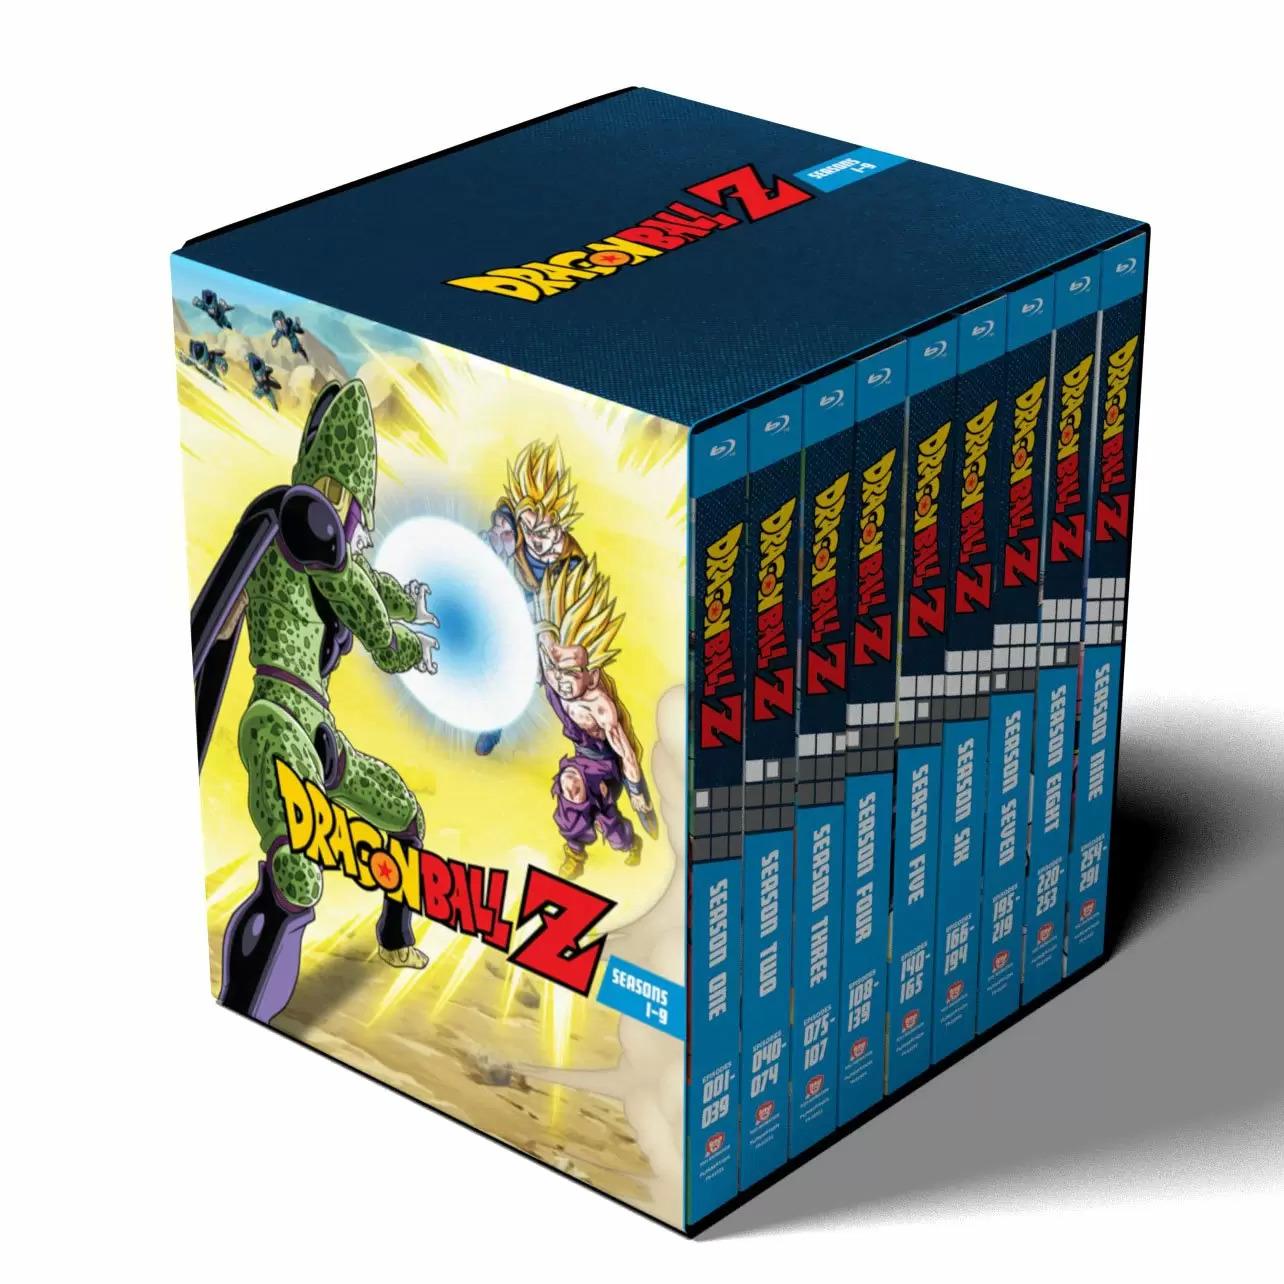 Dragon Ball Z Seasons 1-9 Collection Blu-ray for $99.99 Shipped